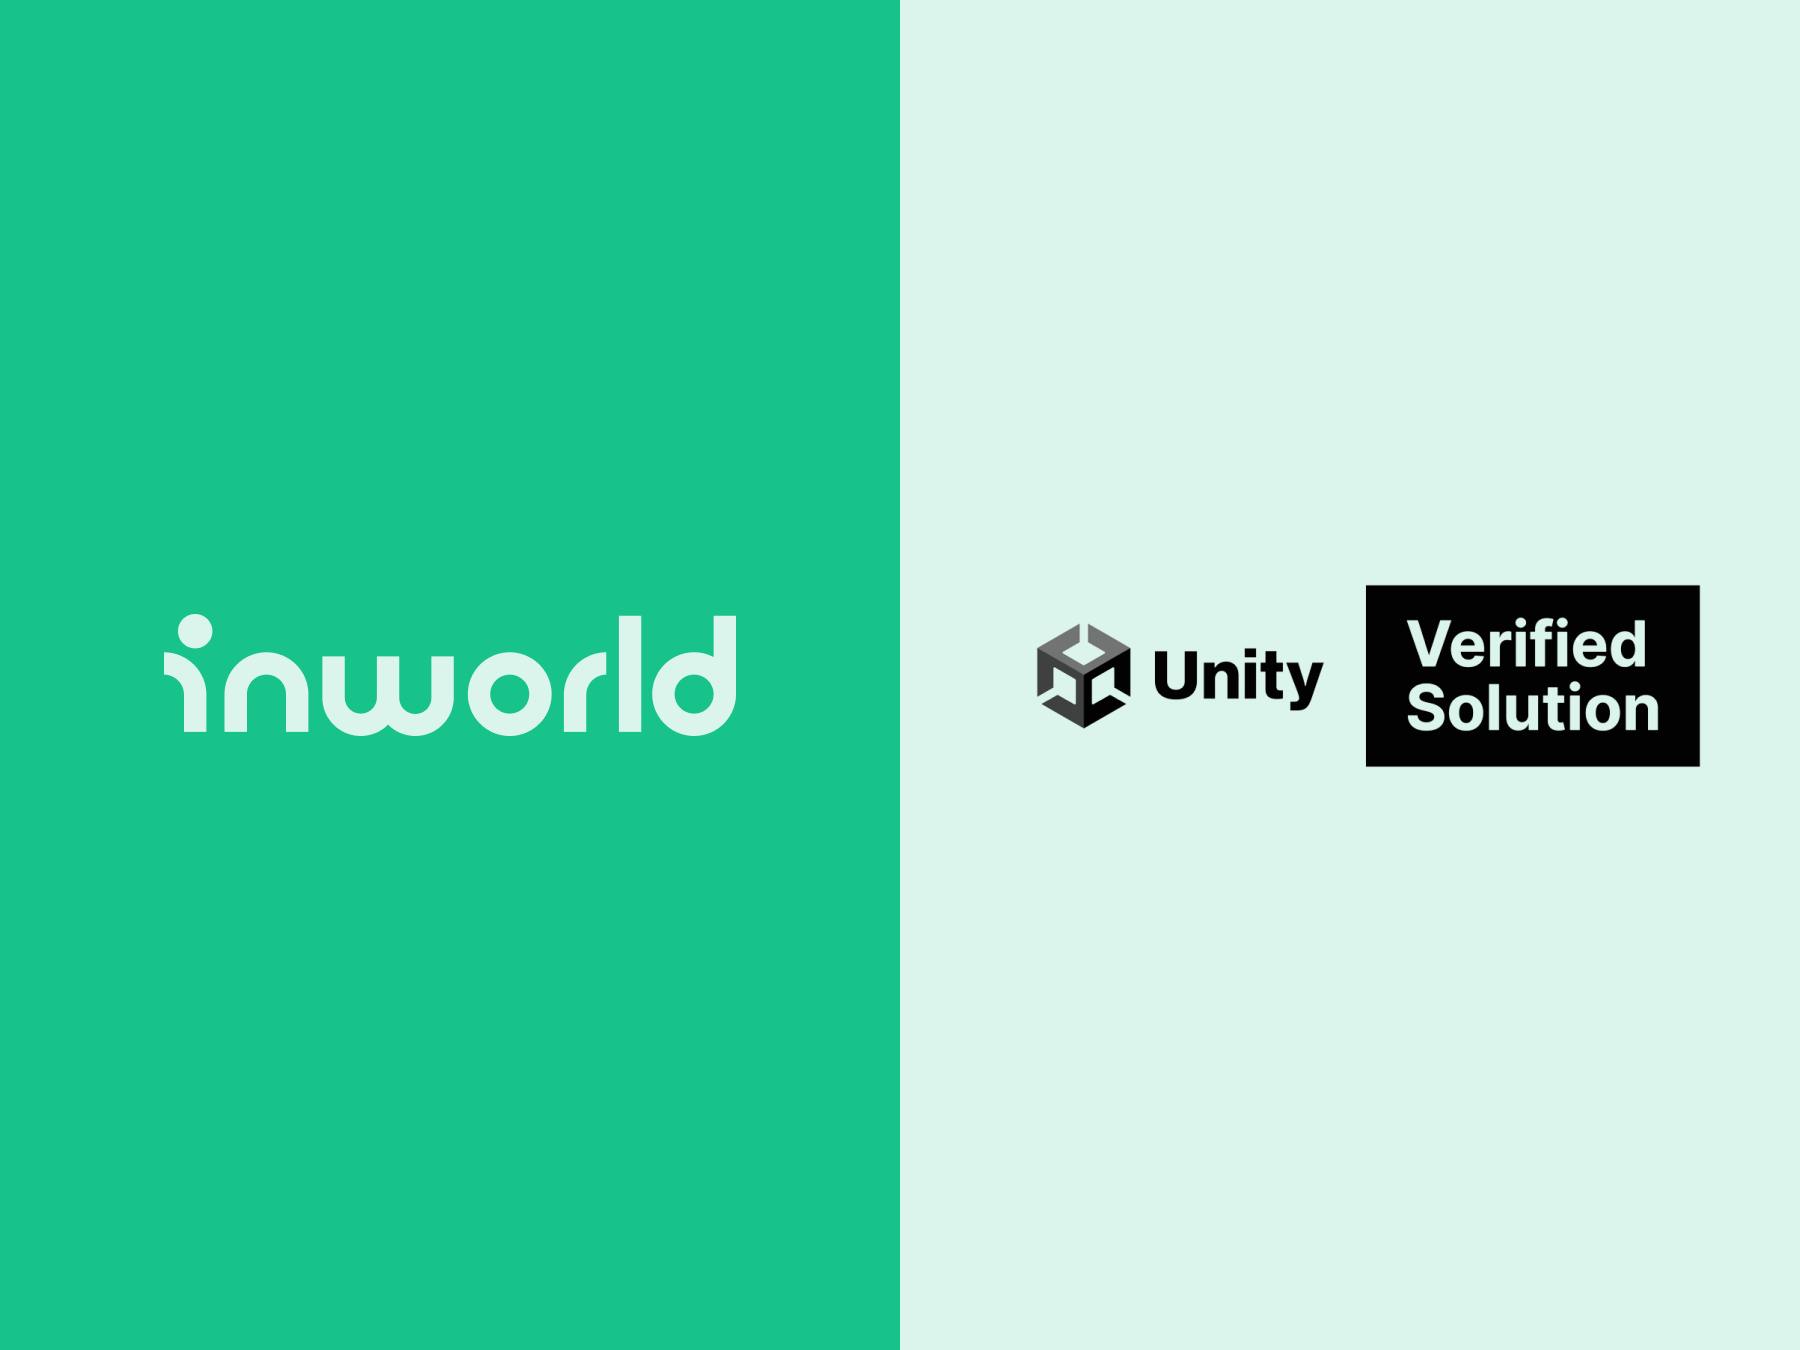 Inworld is Unity partner